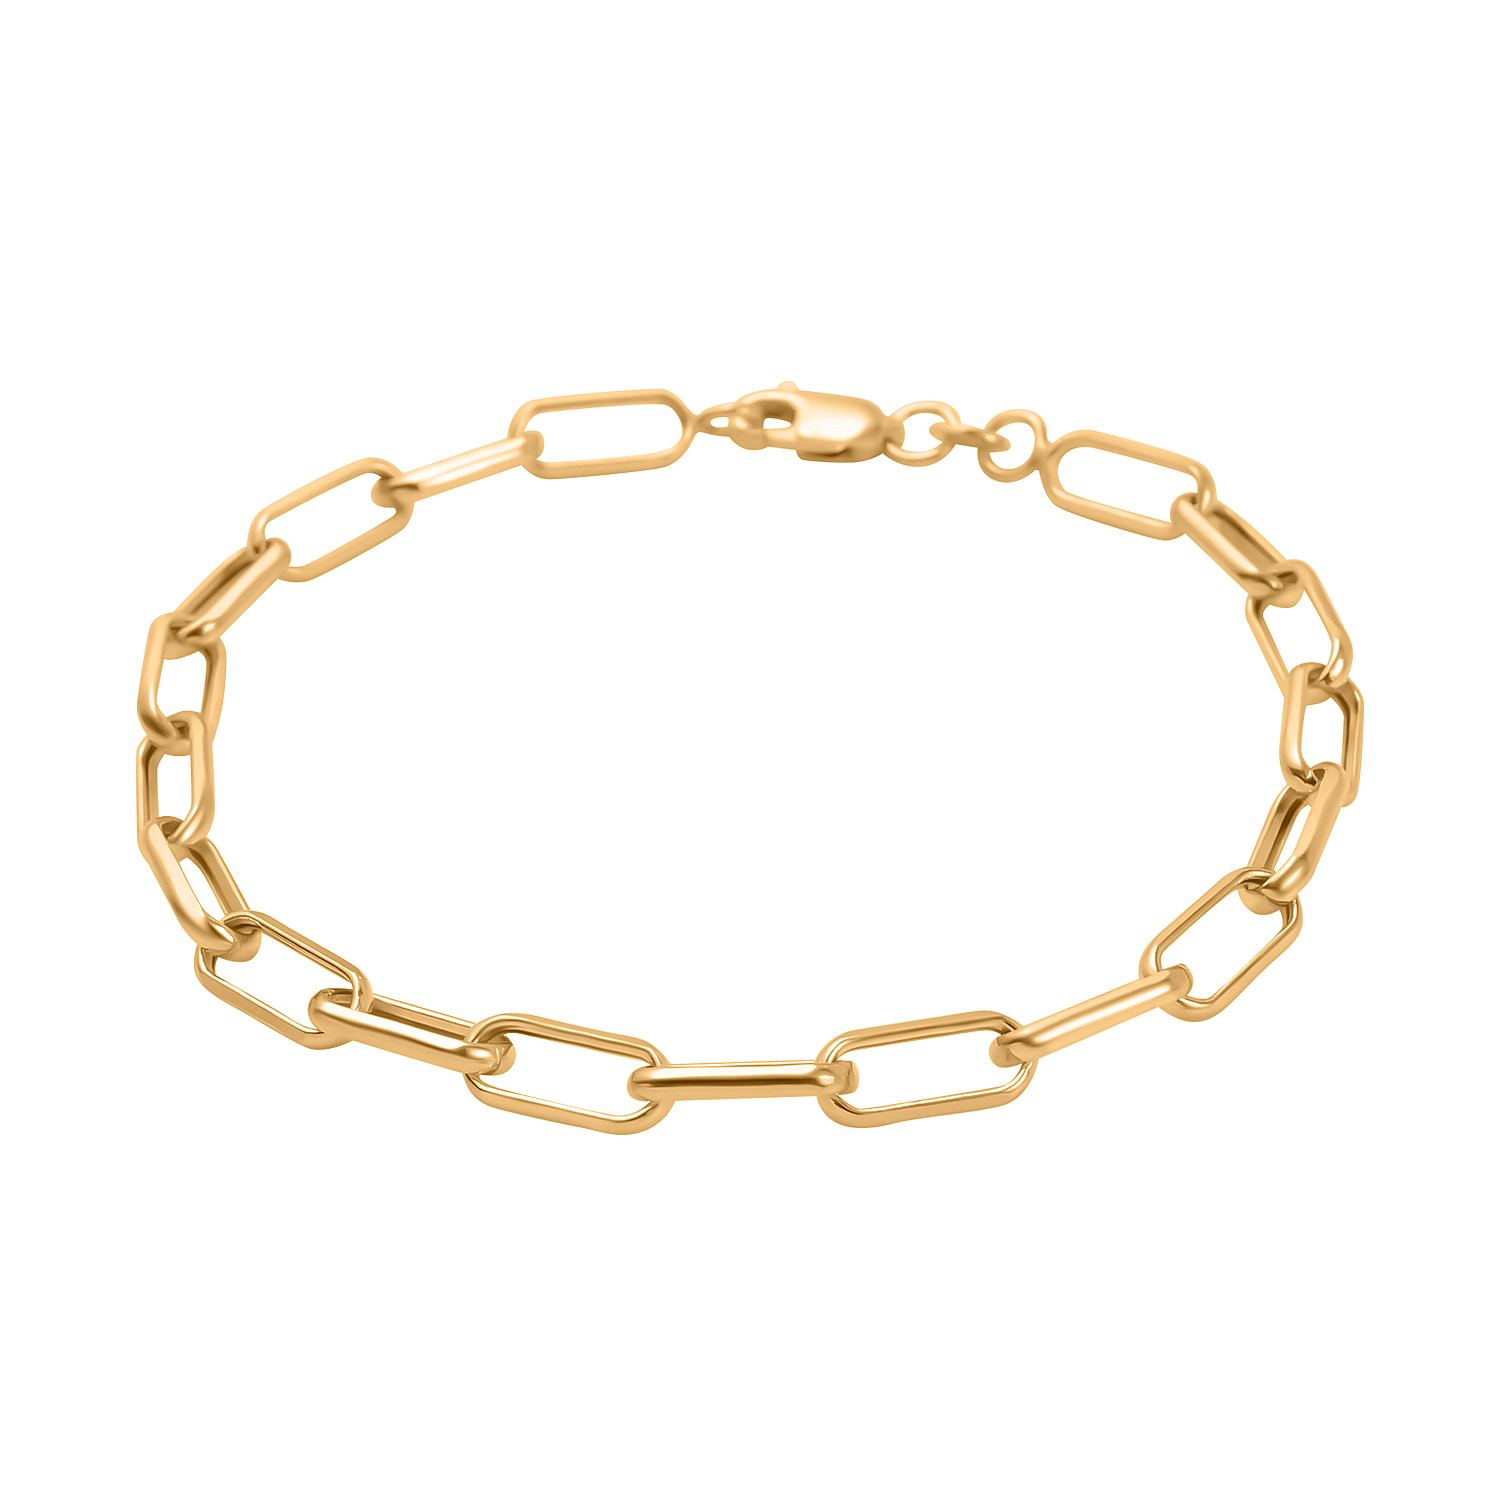 Designer Inspired 9K Yellow Gold Paperclip Bracelet (Size - 7.5), Gold Wt. 2.60 Gms